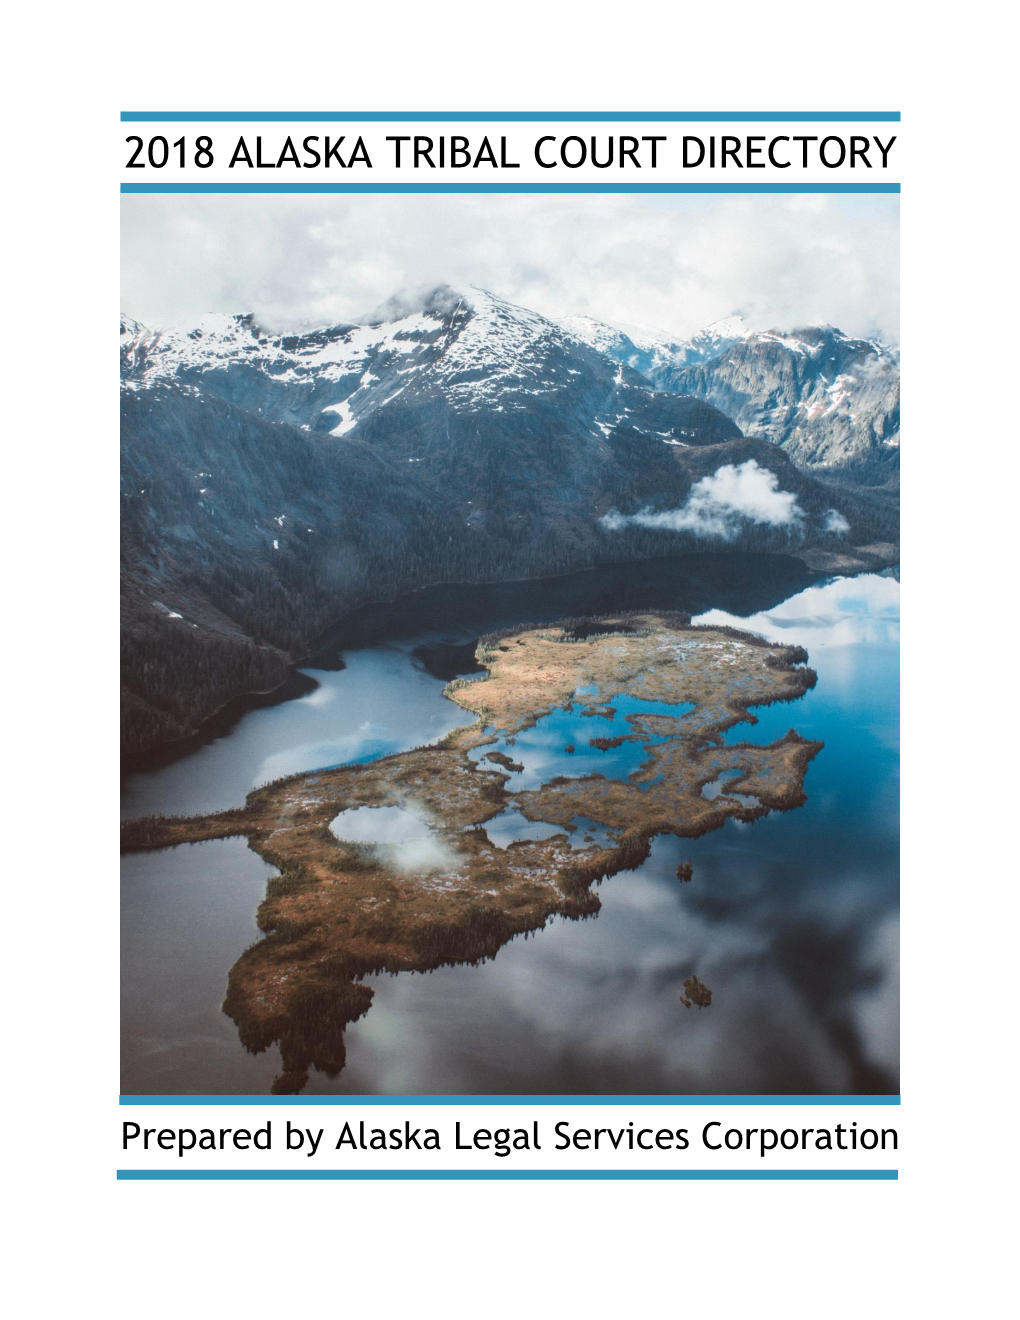 2018 Alaska Tribal Court Directory